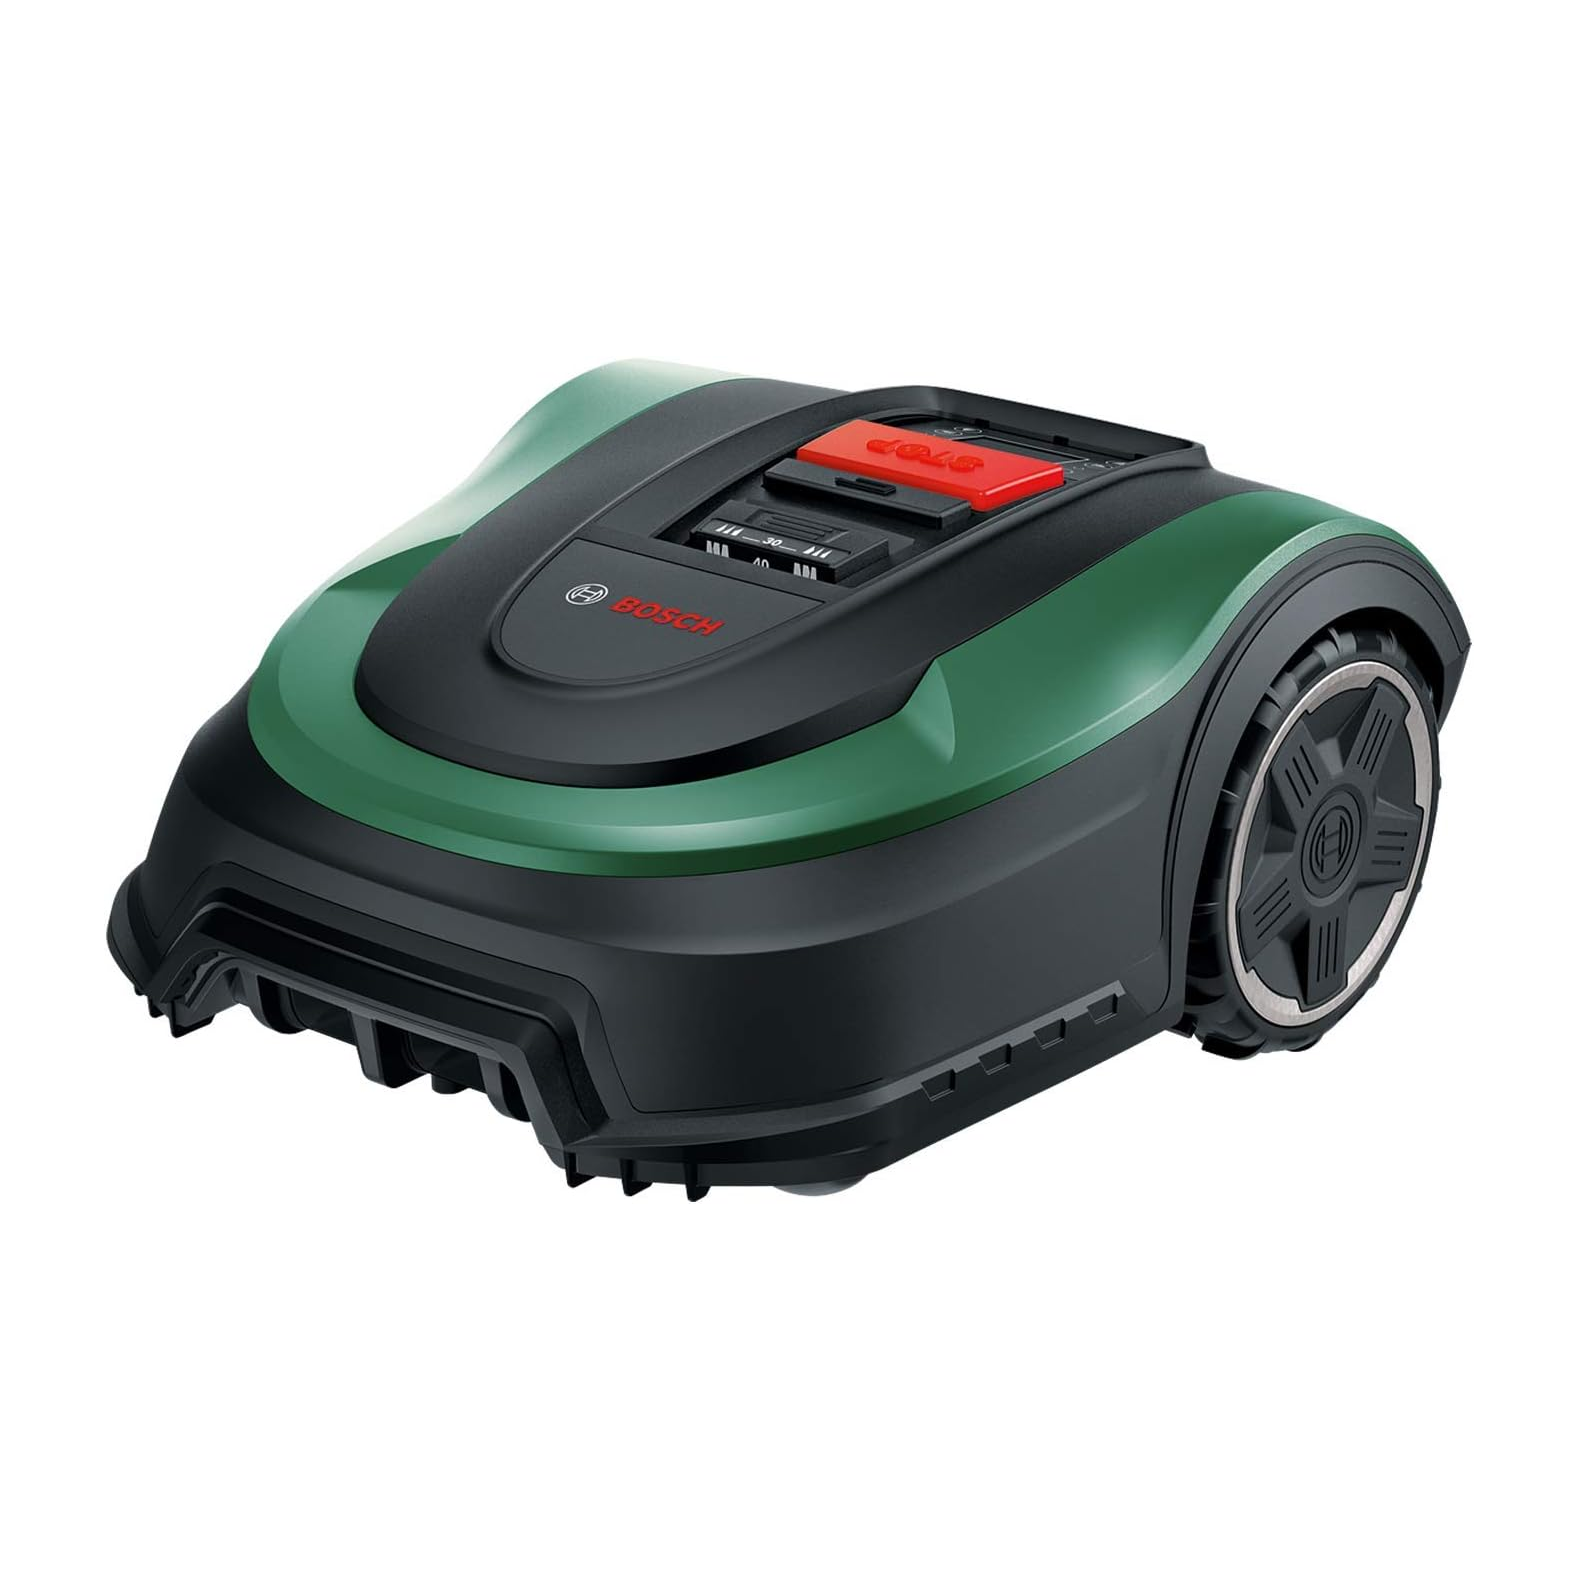 Bosch green indego m+ 700 18v cordless robotic lawn mower 06008b0373